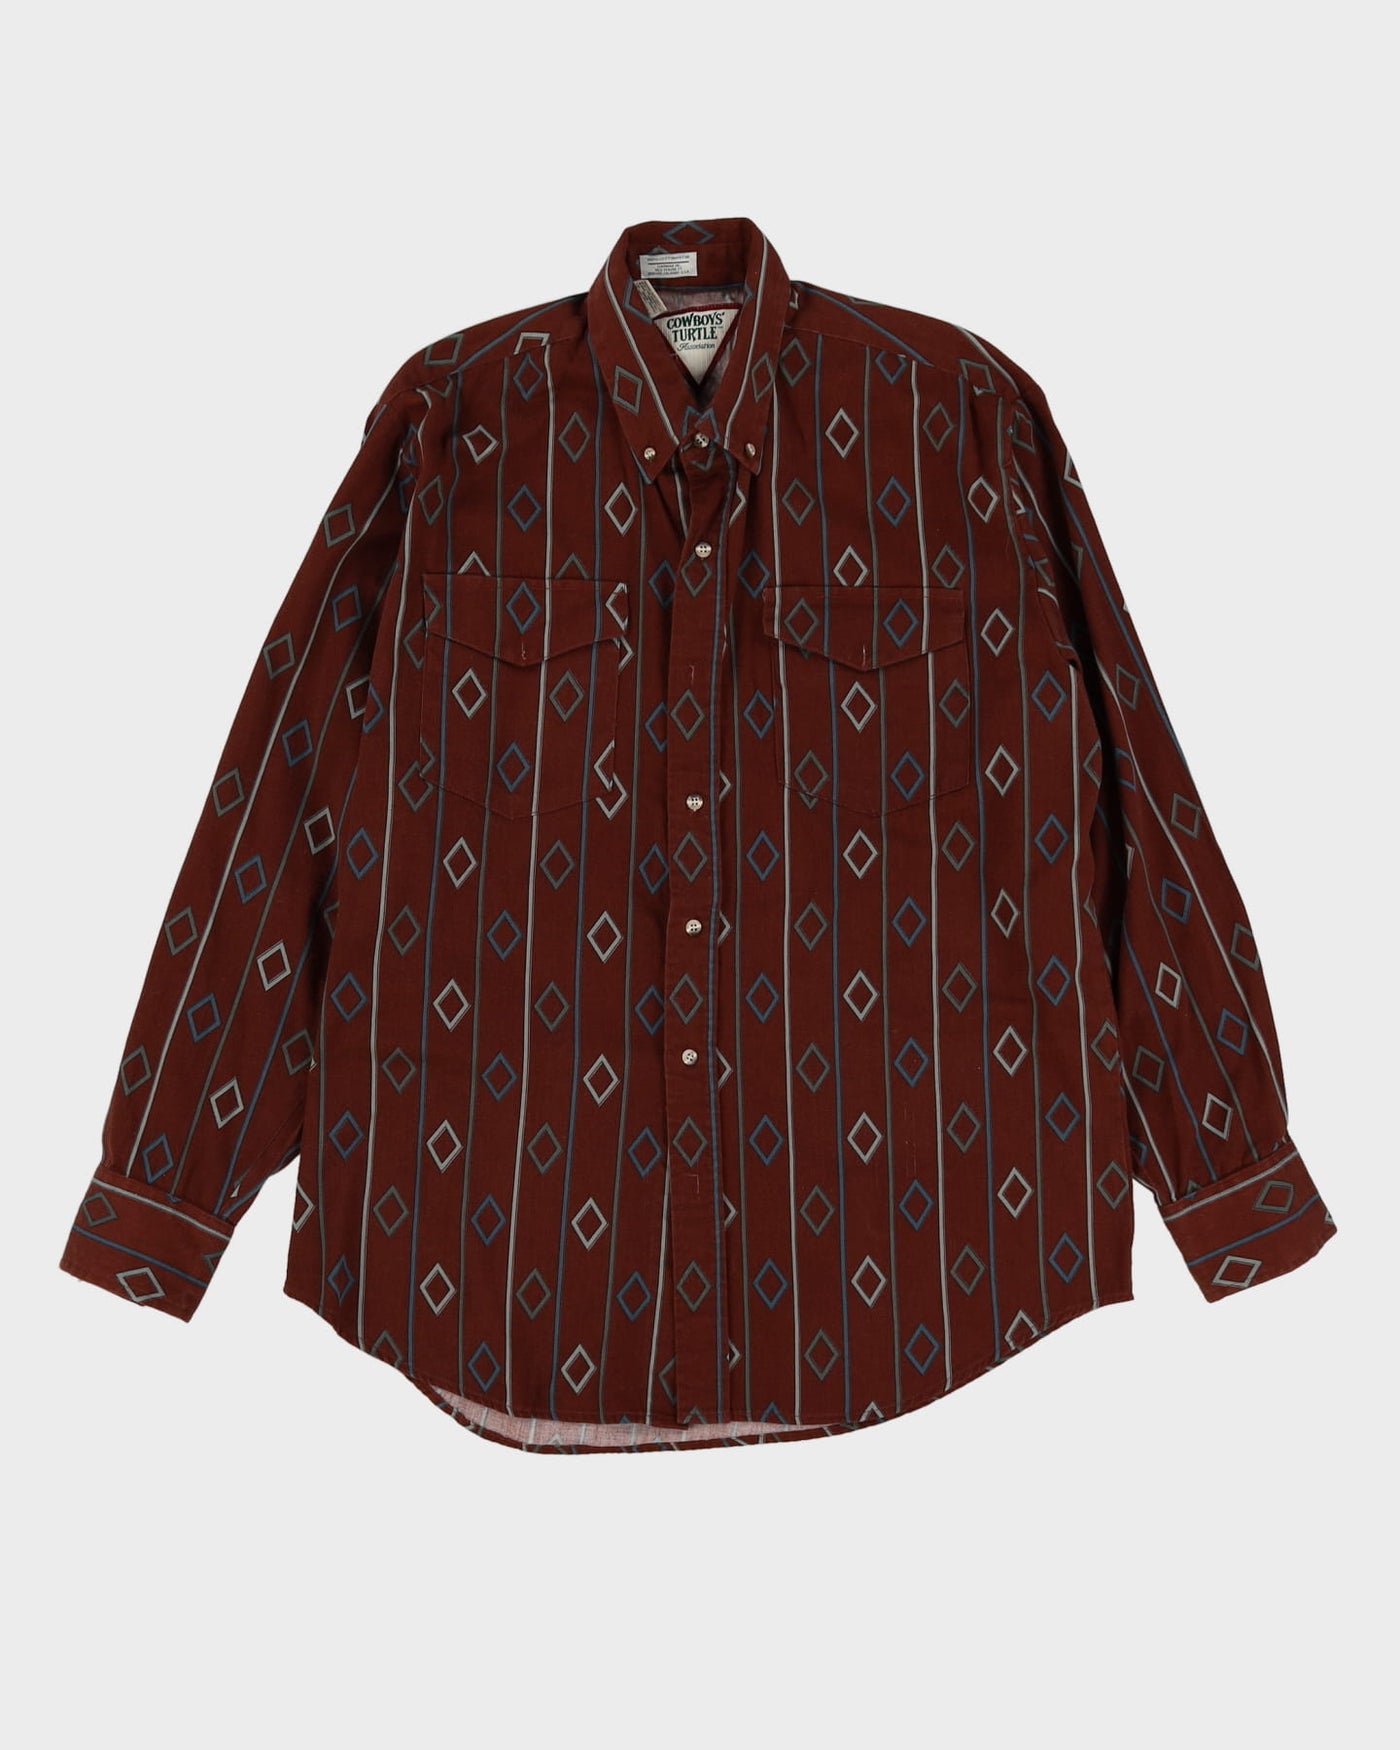 Vintage 90s Cowboys Turtle Western Long Sleeve Shirt - XL